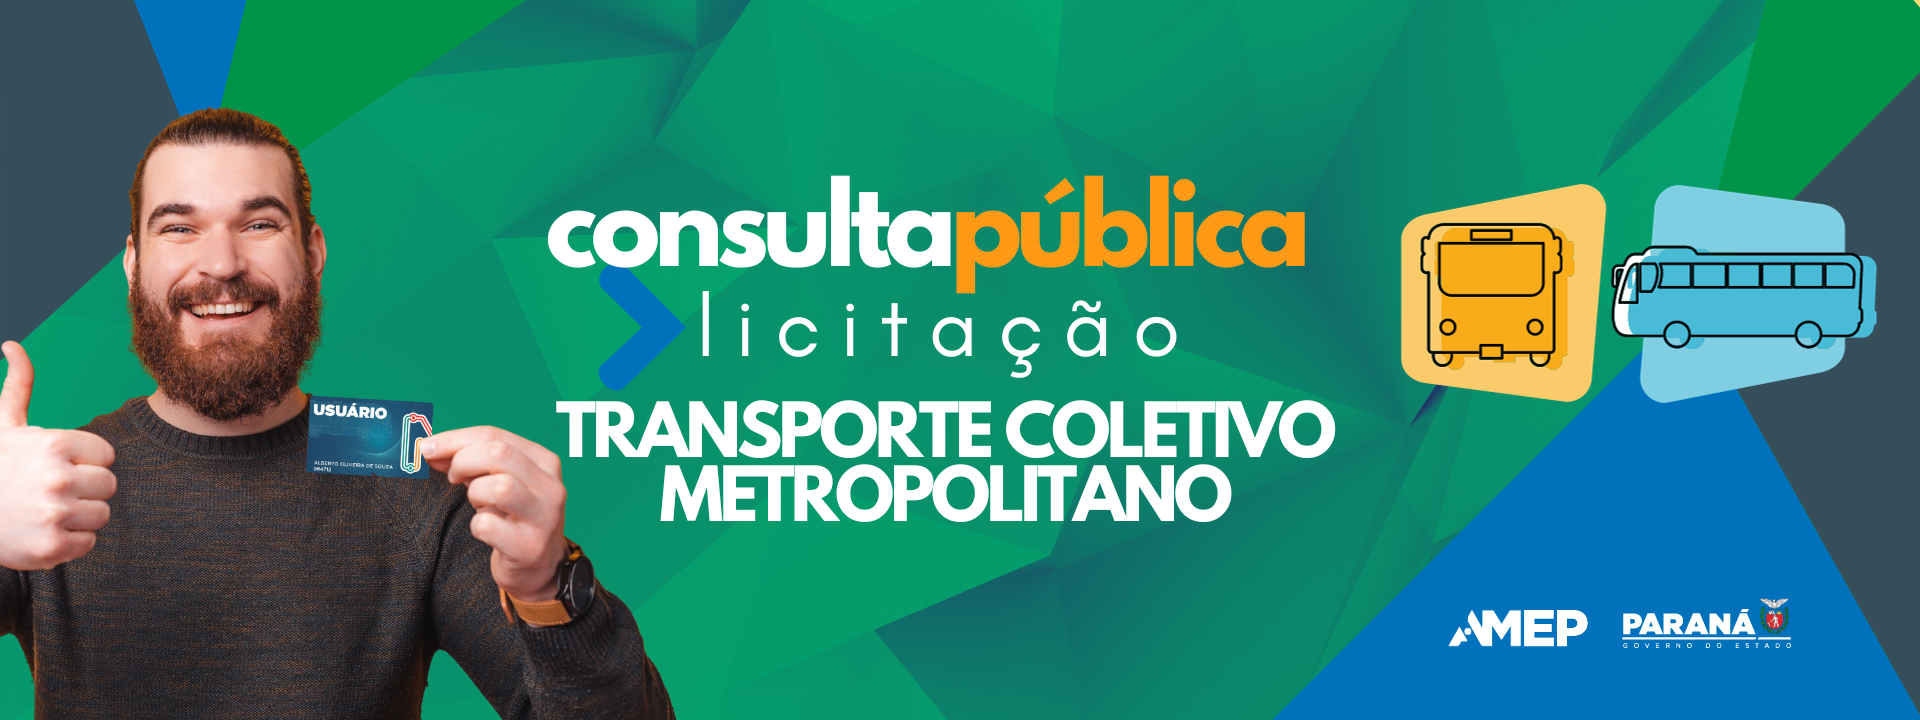 consulta pública transporte coletivo metropolitano